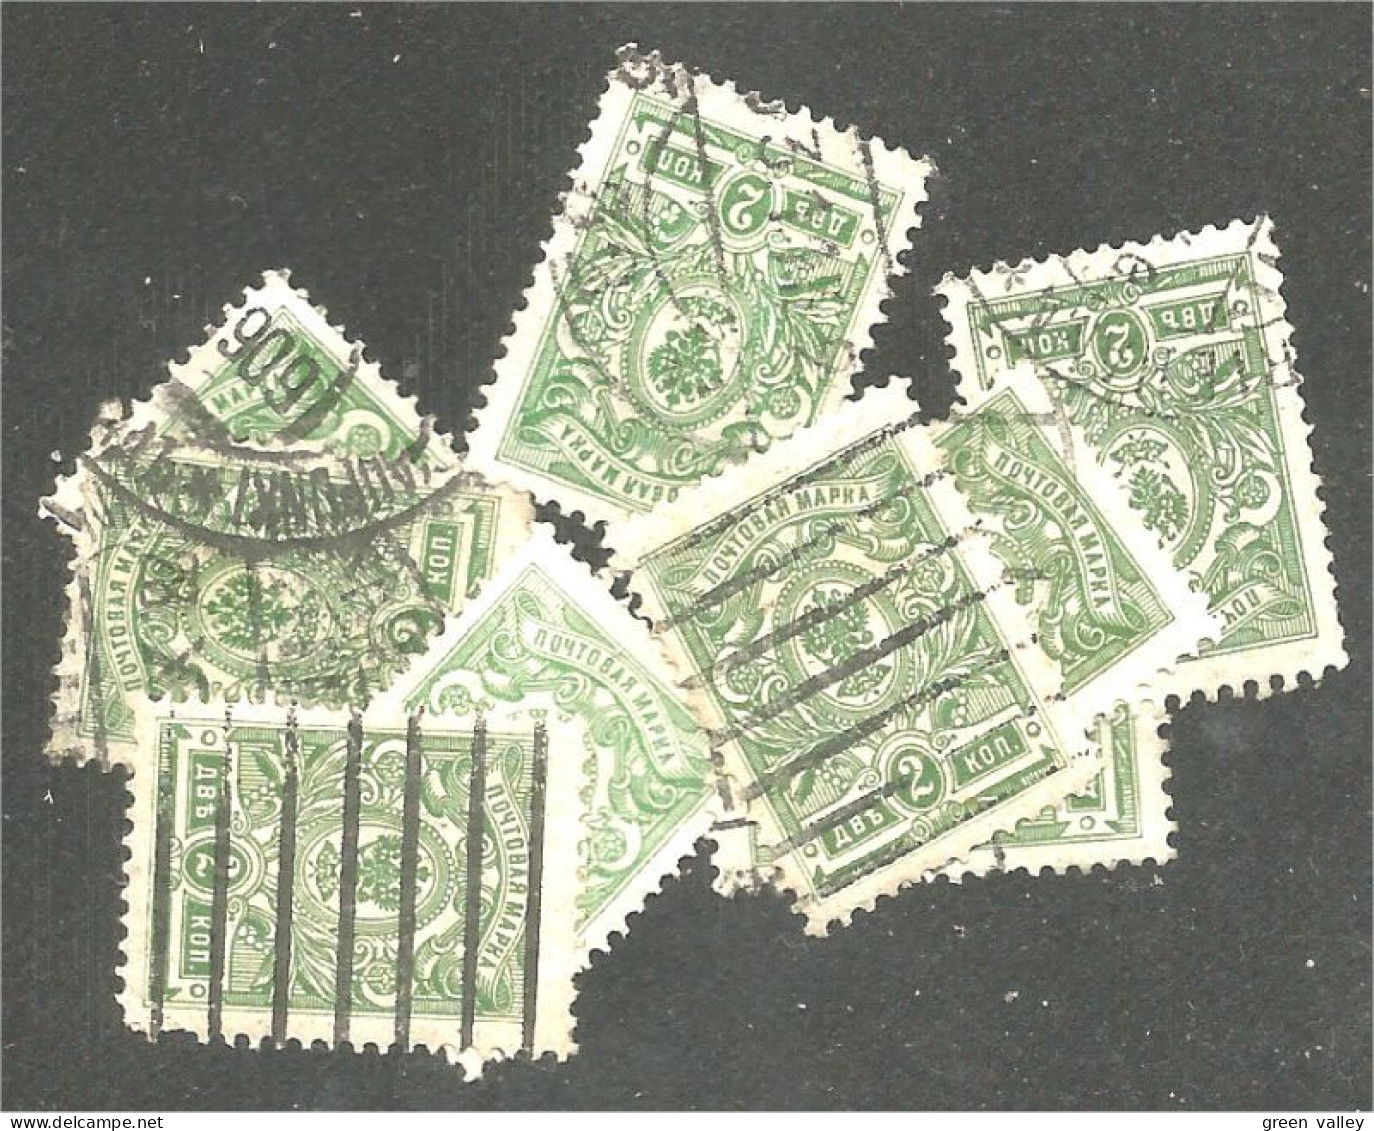 771 Russie 2k 1909 9 Stamps Green Vert Aigle Imperial Eagle Post Horn Cor Postal Varnish (RUZ-352) - Gebraucht